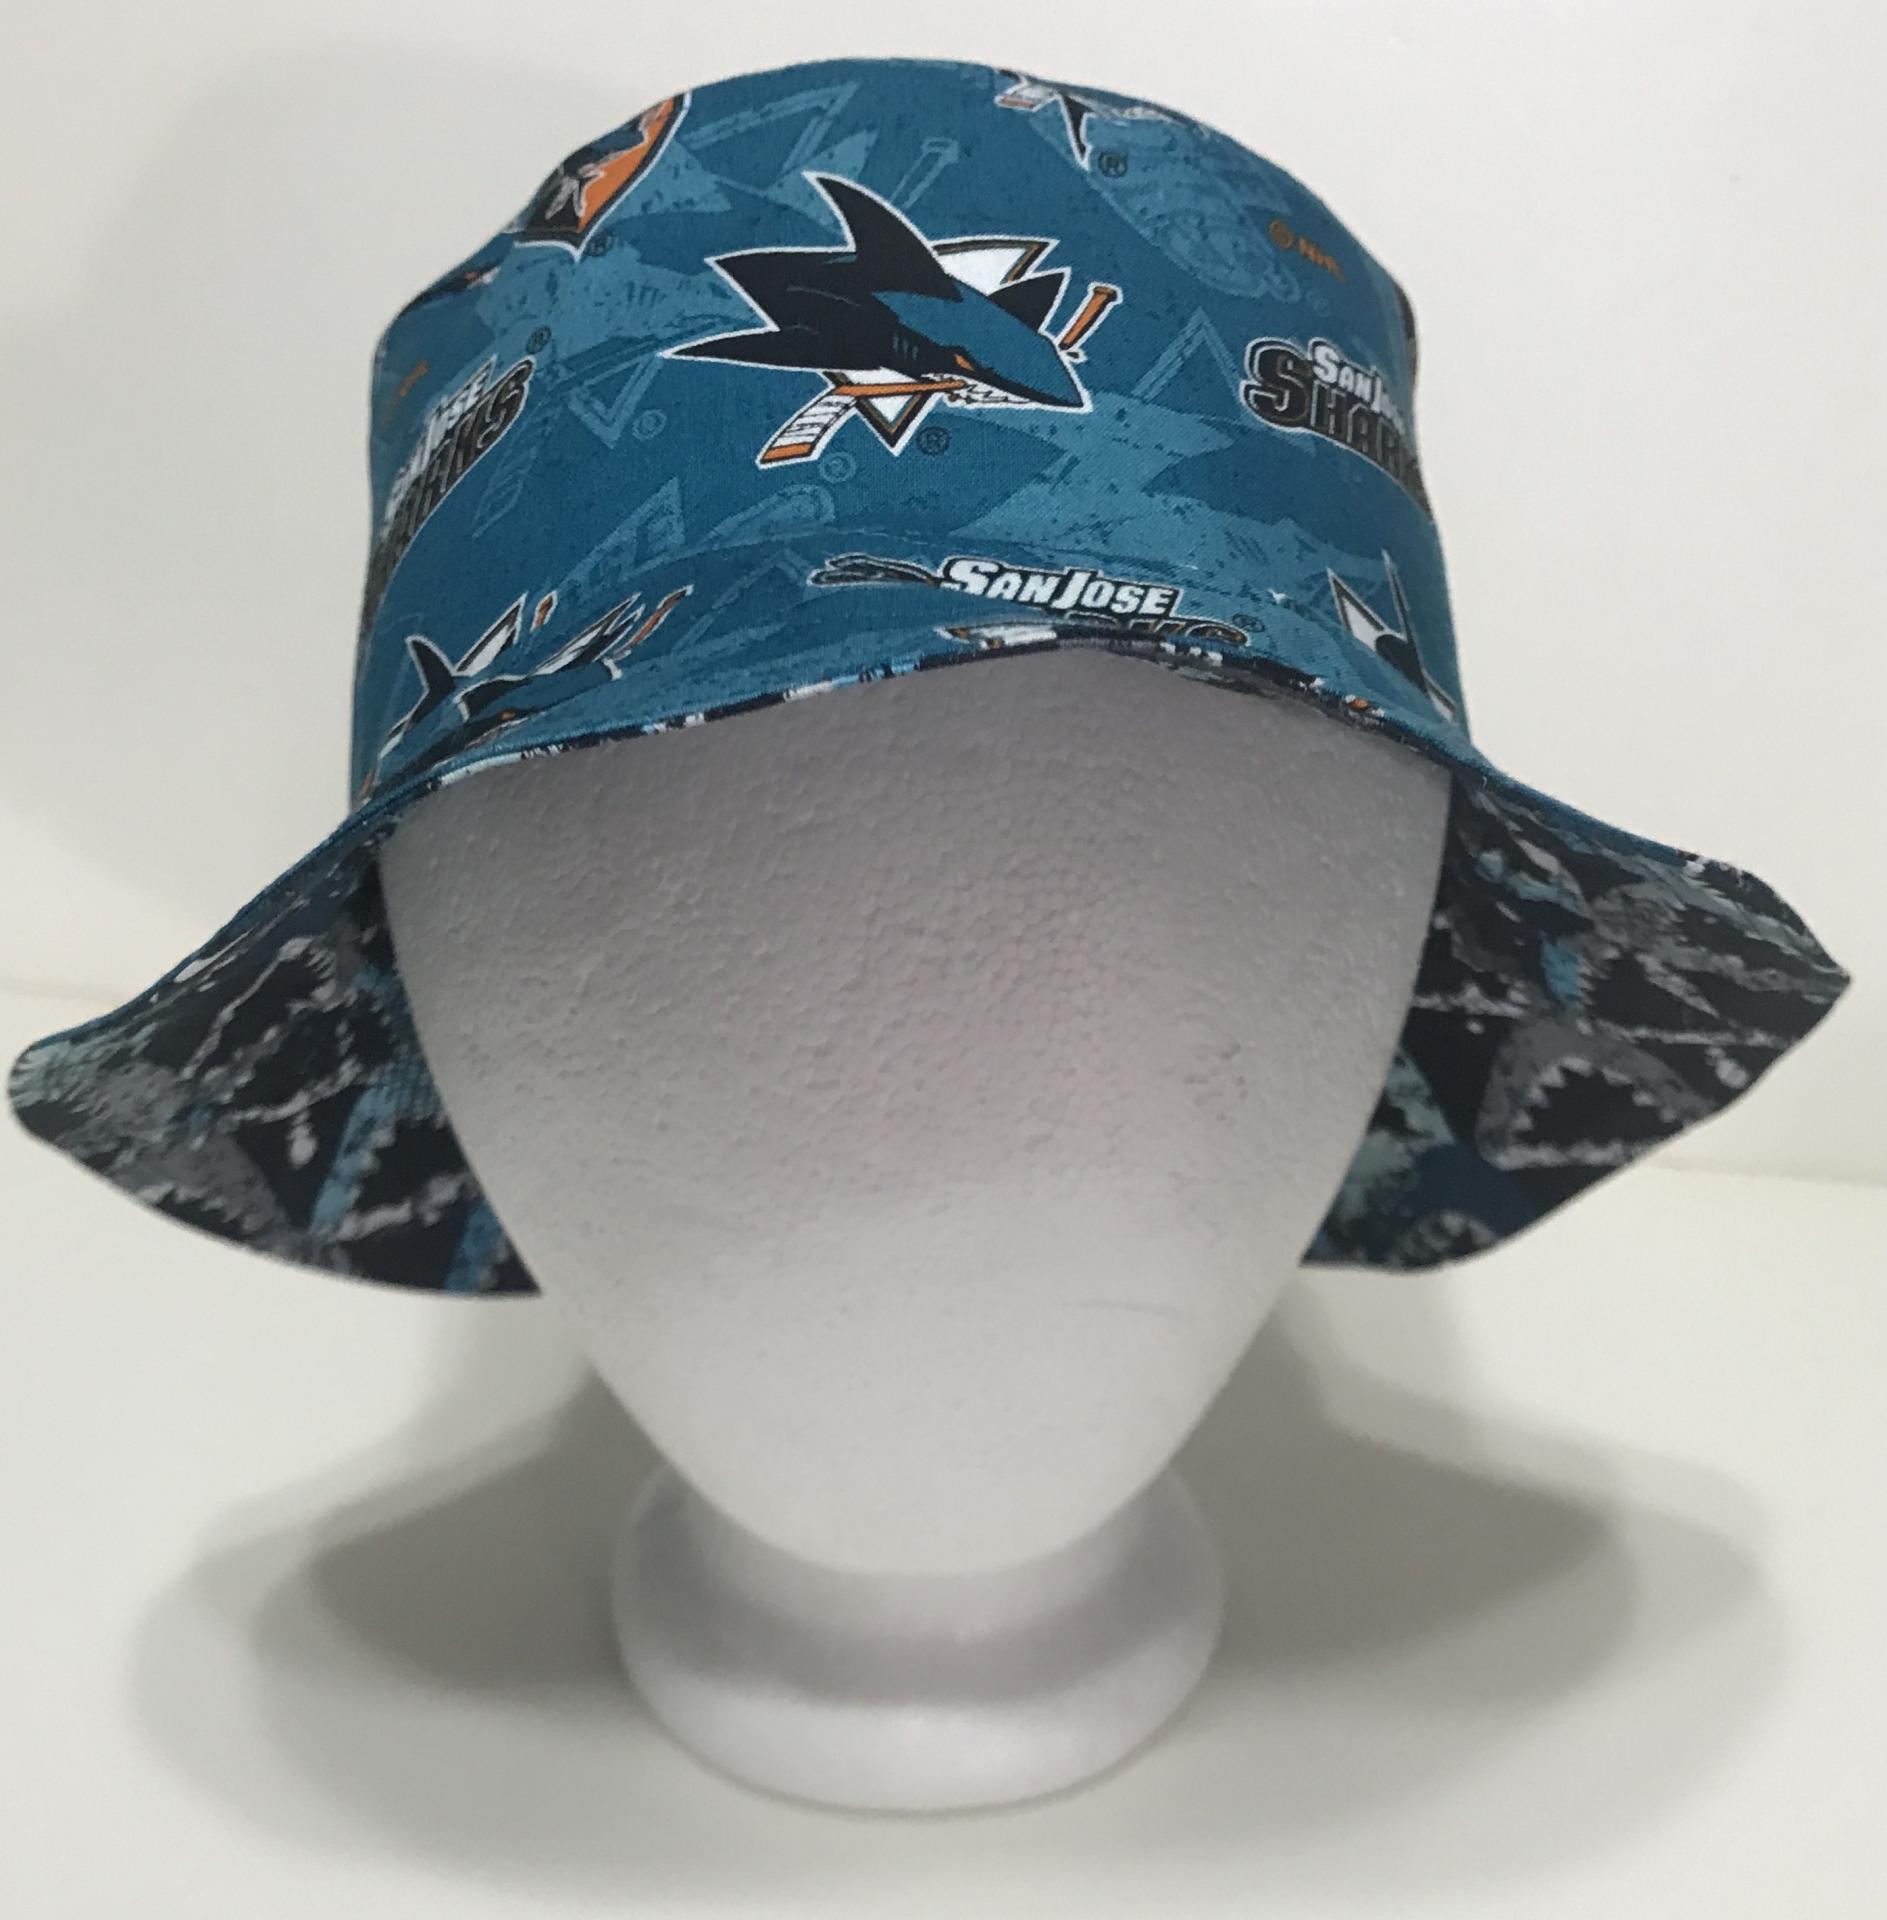 San Jose Sharks Bucket Hat, Reversible, SJ Hockey, Unisex Adult Sizes S-XXL, cotton, summer fishing hat, sun hat, floppy hat